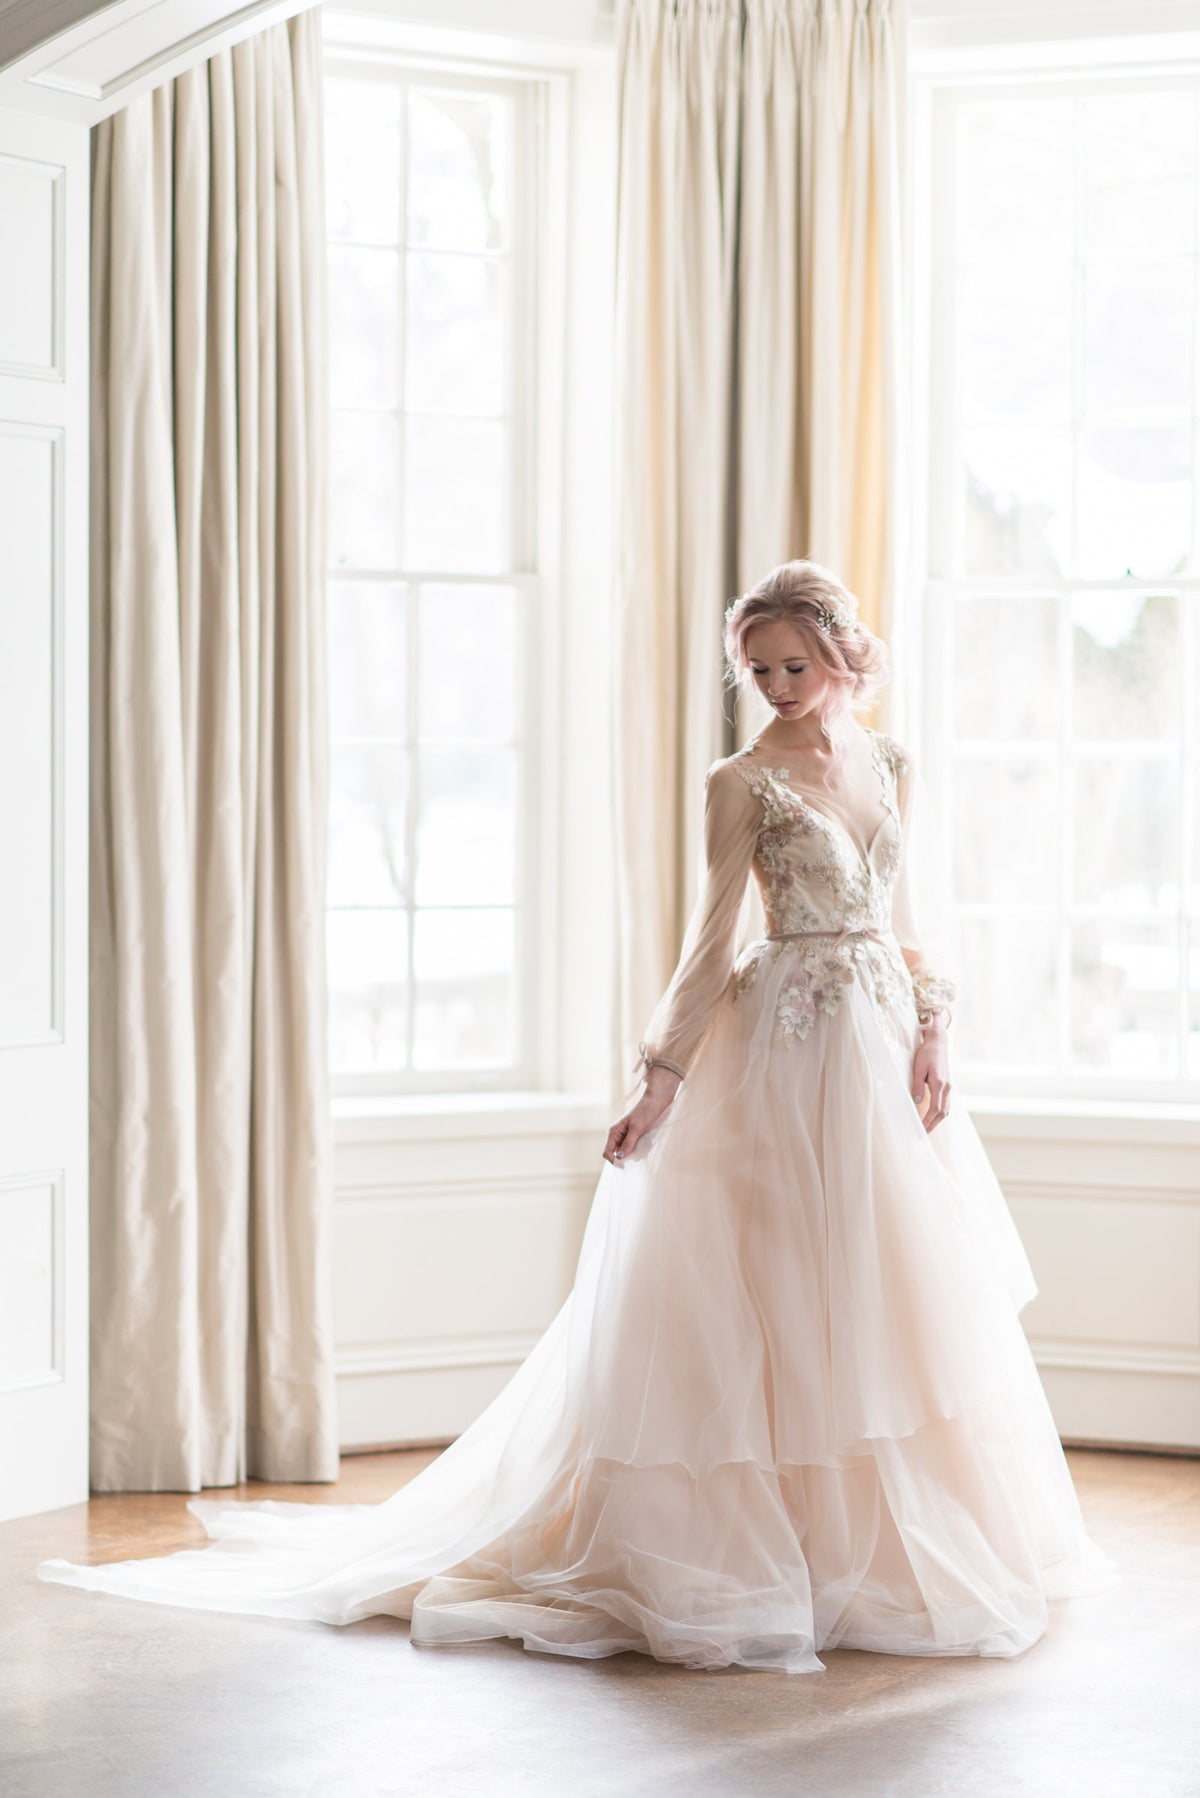 Romantic Canadian wedding dresses, Luxury custom made wedding dresses Toronto. Blush organza floral garden wedding dress.